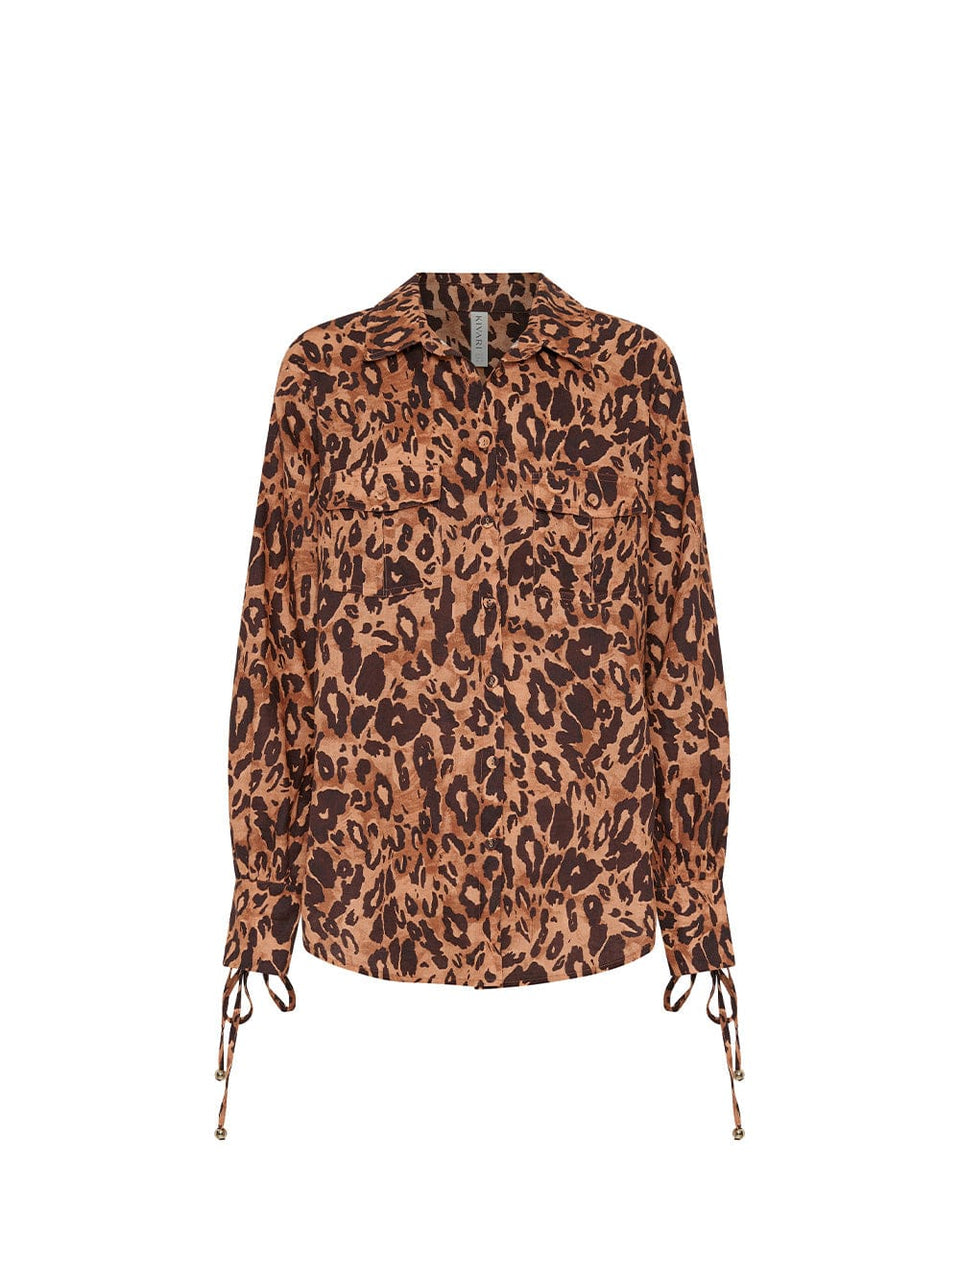 Madison Shirt KIVARI | Orange and brown leopard shirt